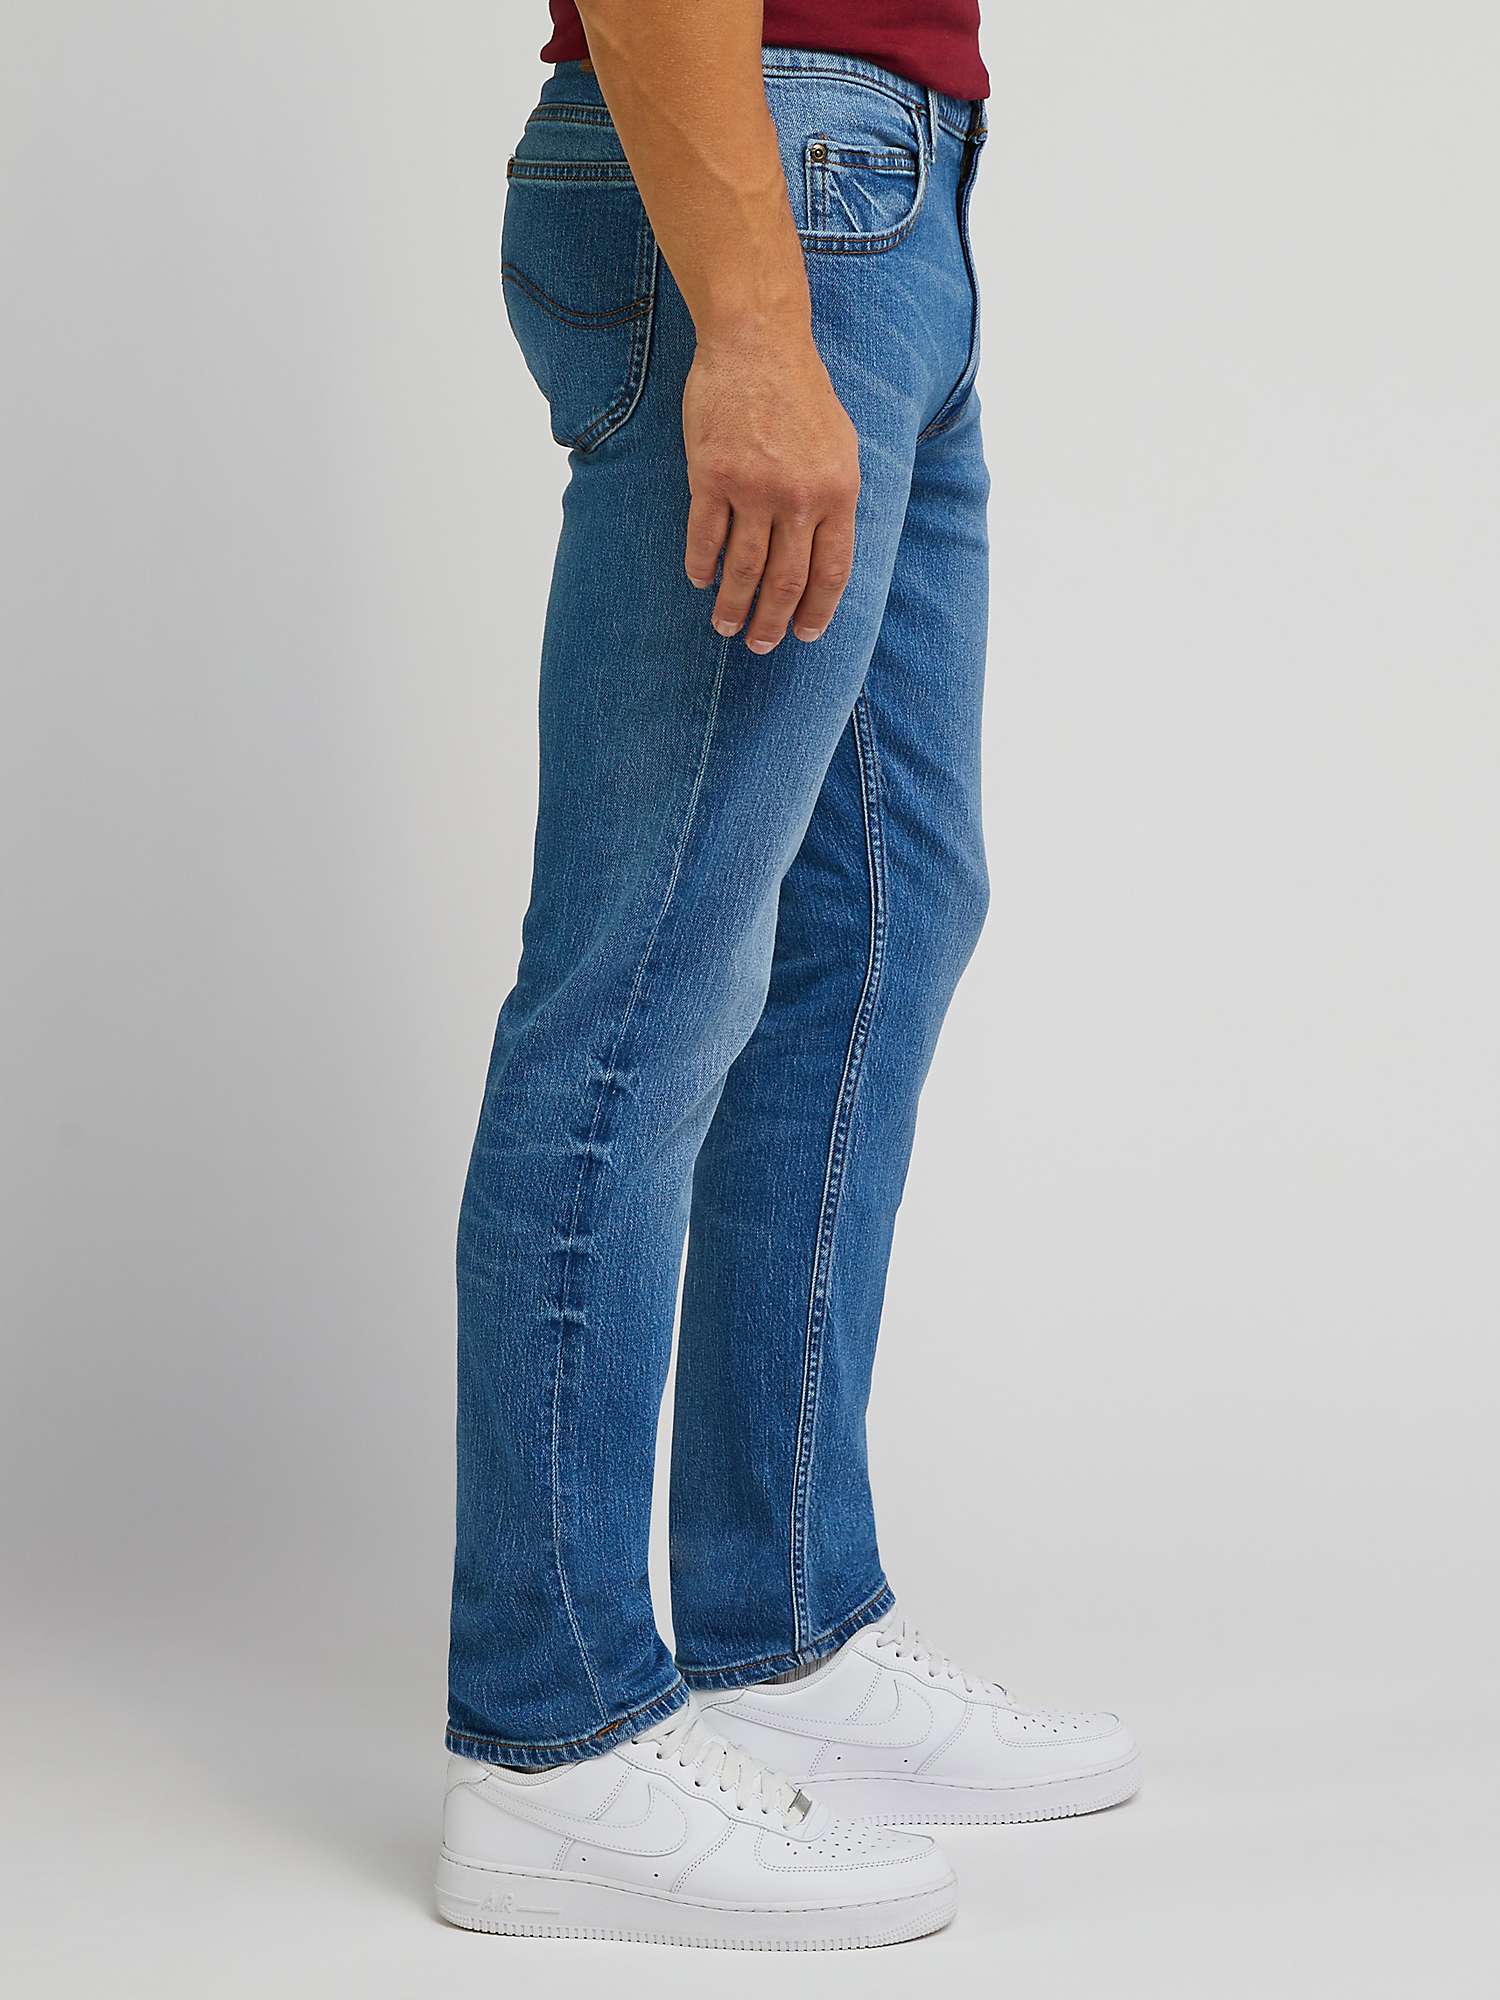 Buy Lee Rider Slim Fit Denim Jeans, Indigo Vintage Online at johnlewis.com